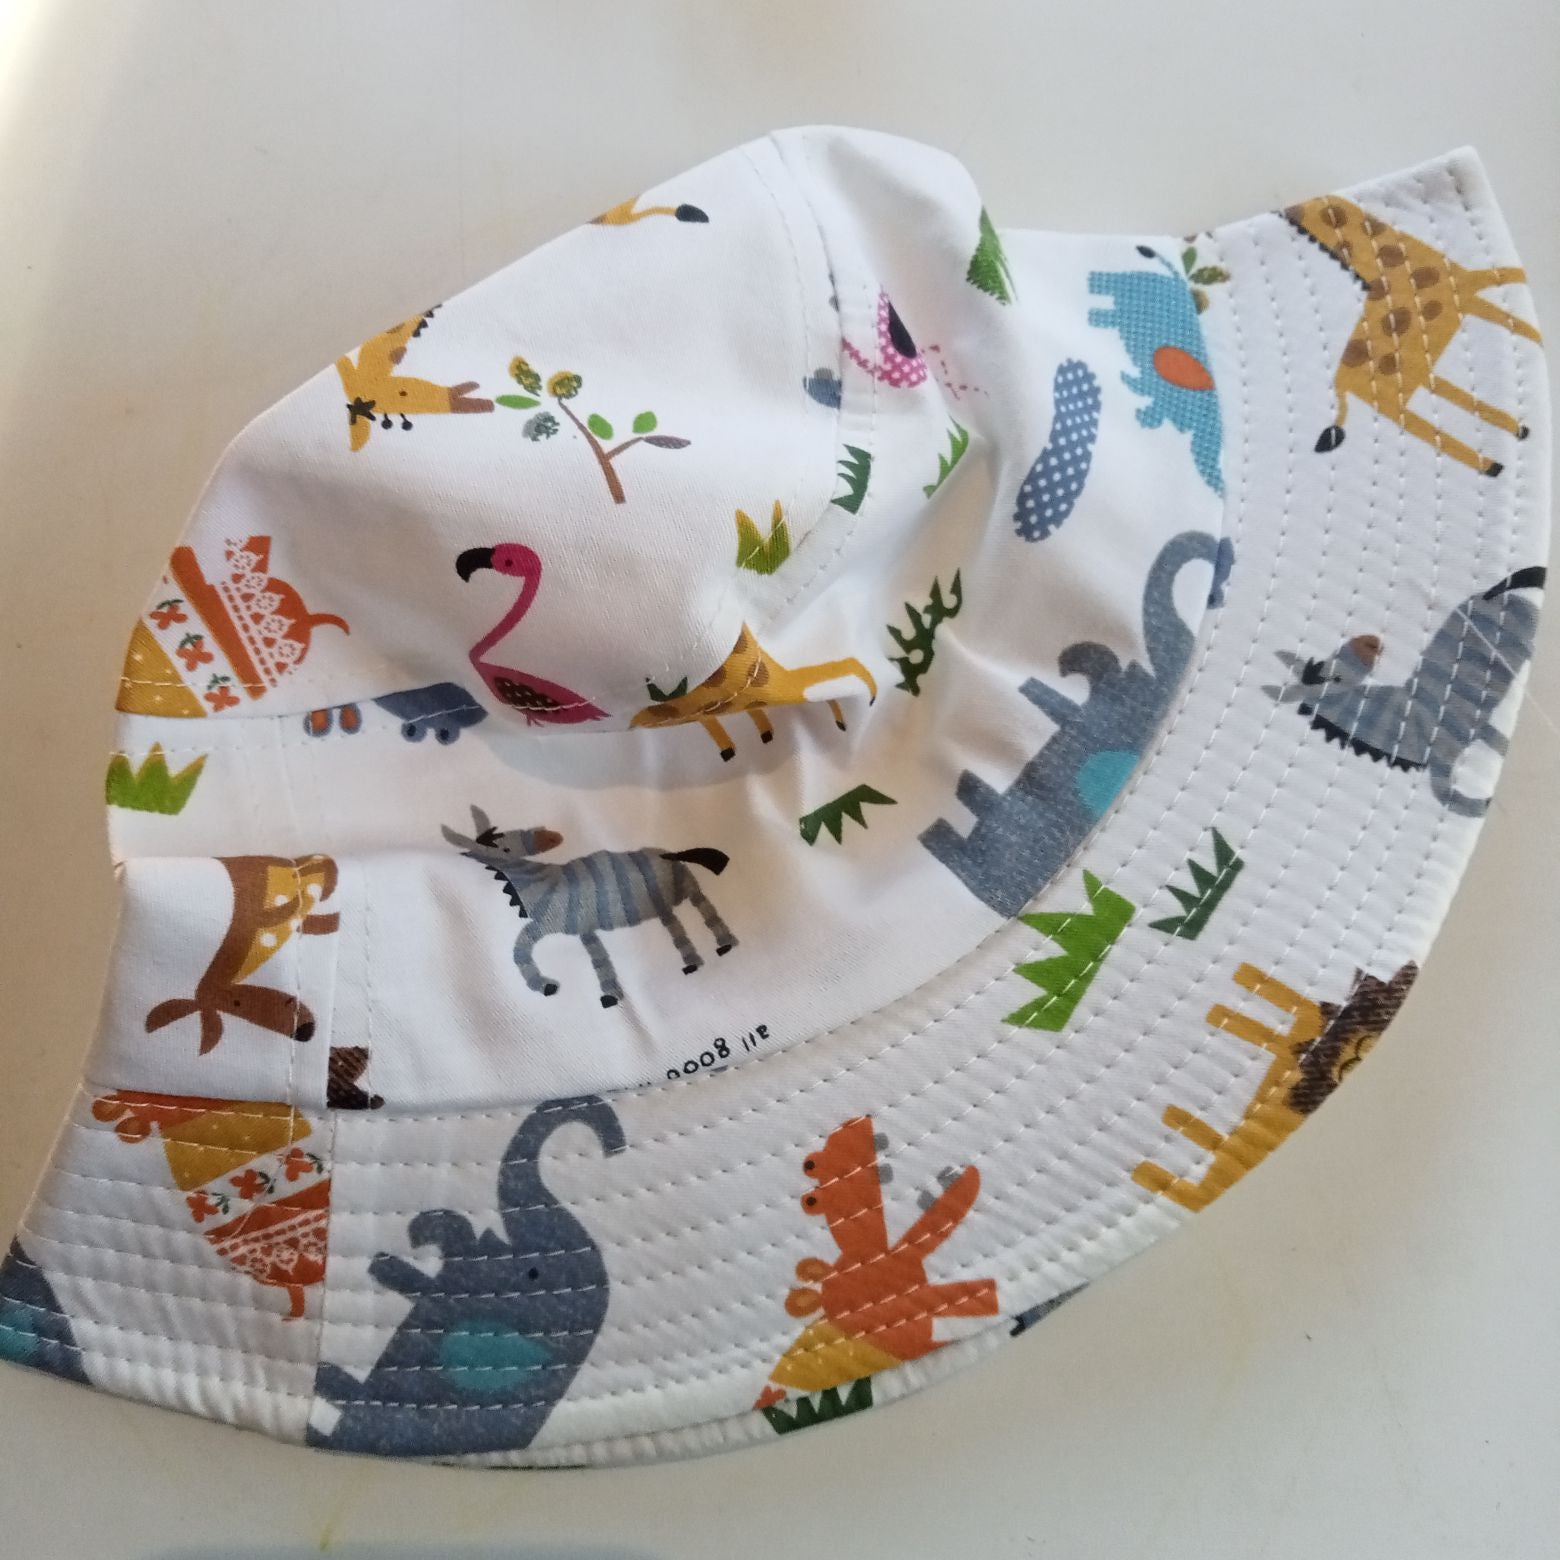 Toddler sun hat